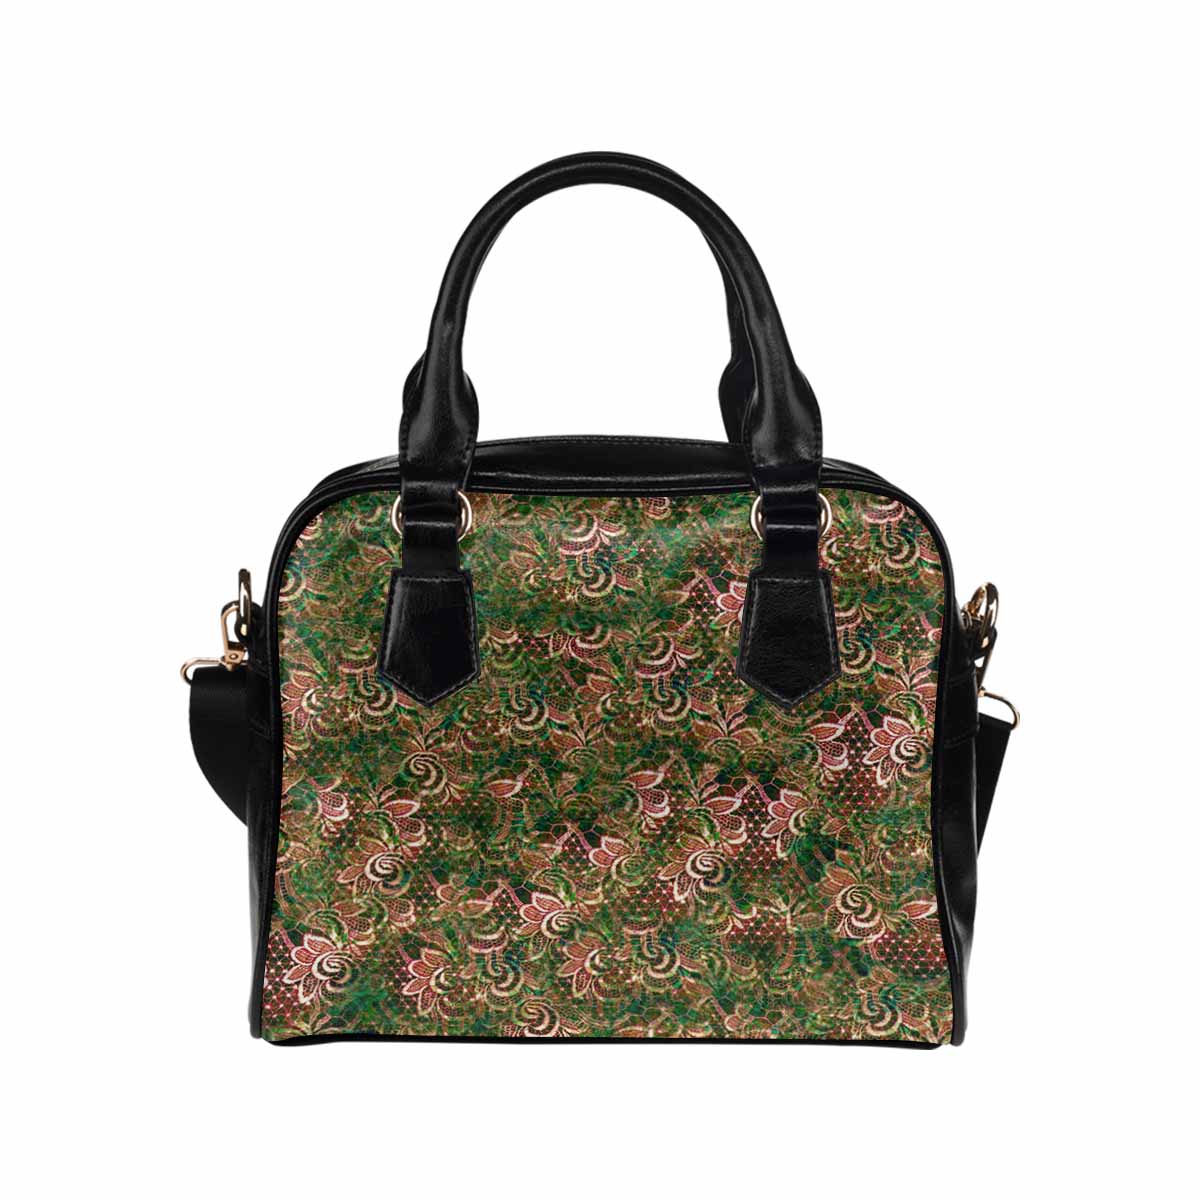 Victorian lace print, cute handbag, Mod 19163453, design 34